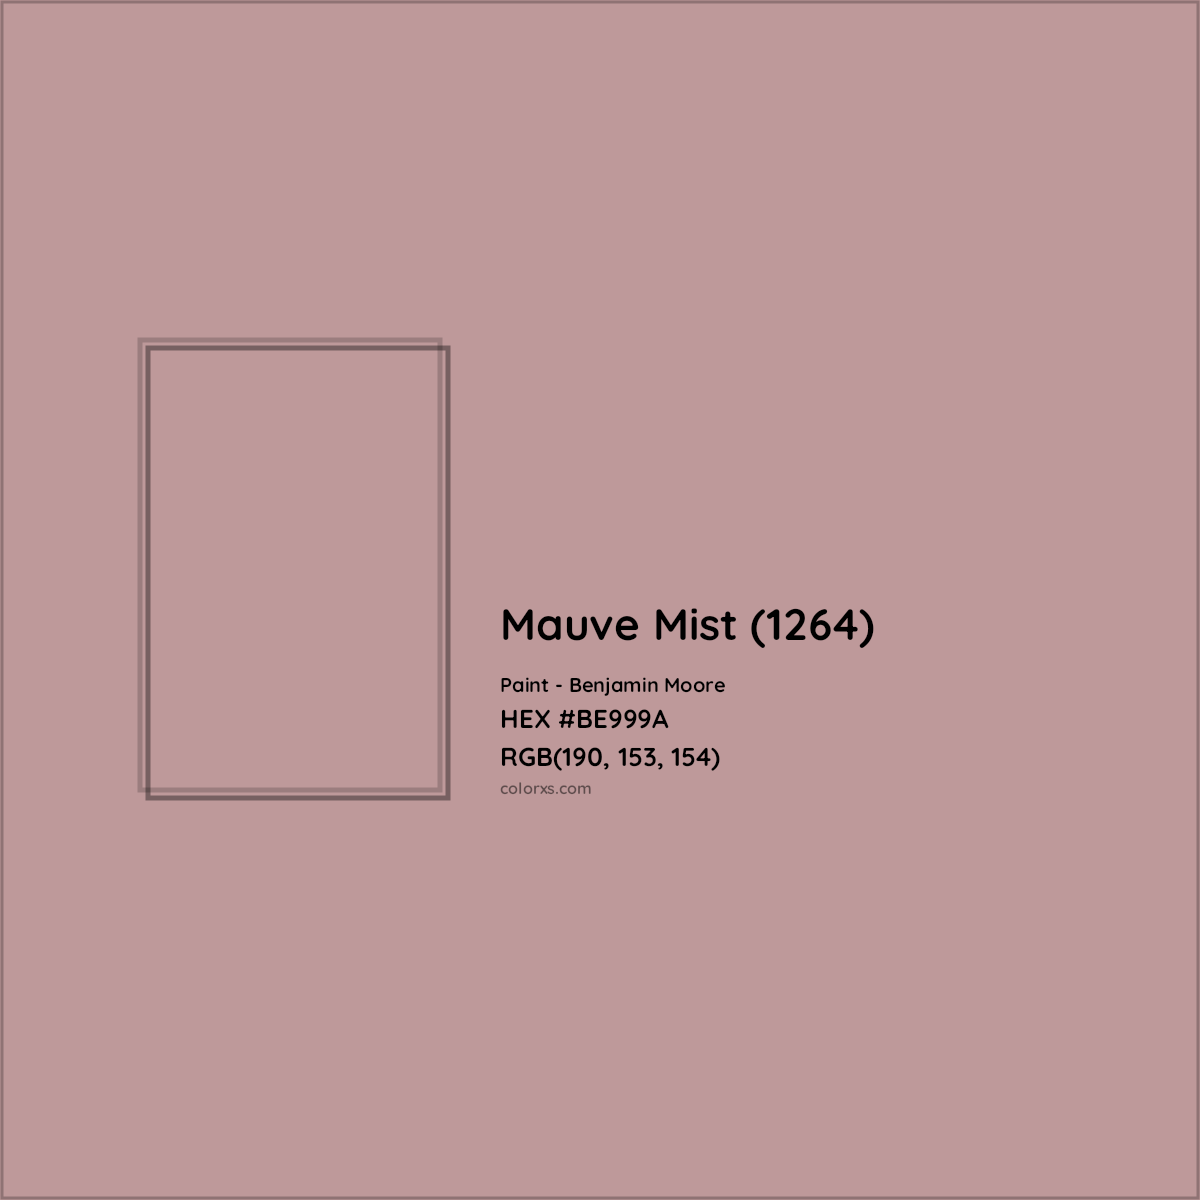 HEX #BE999A Mauve Mist (1264) Paint Benjamin Moore - Color Code